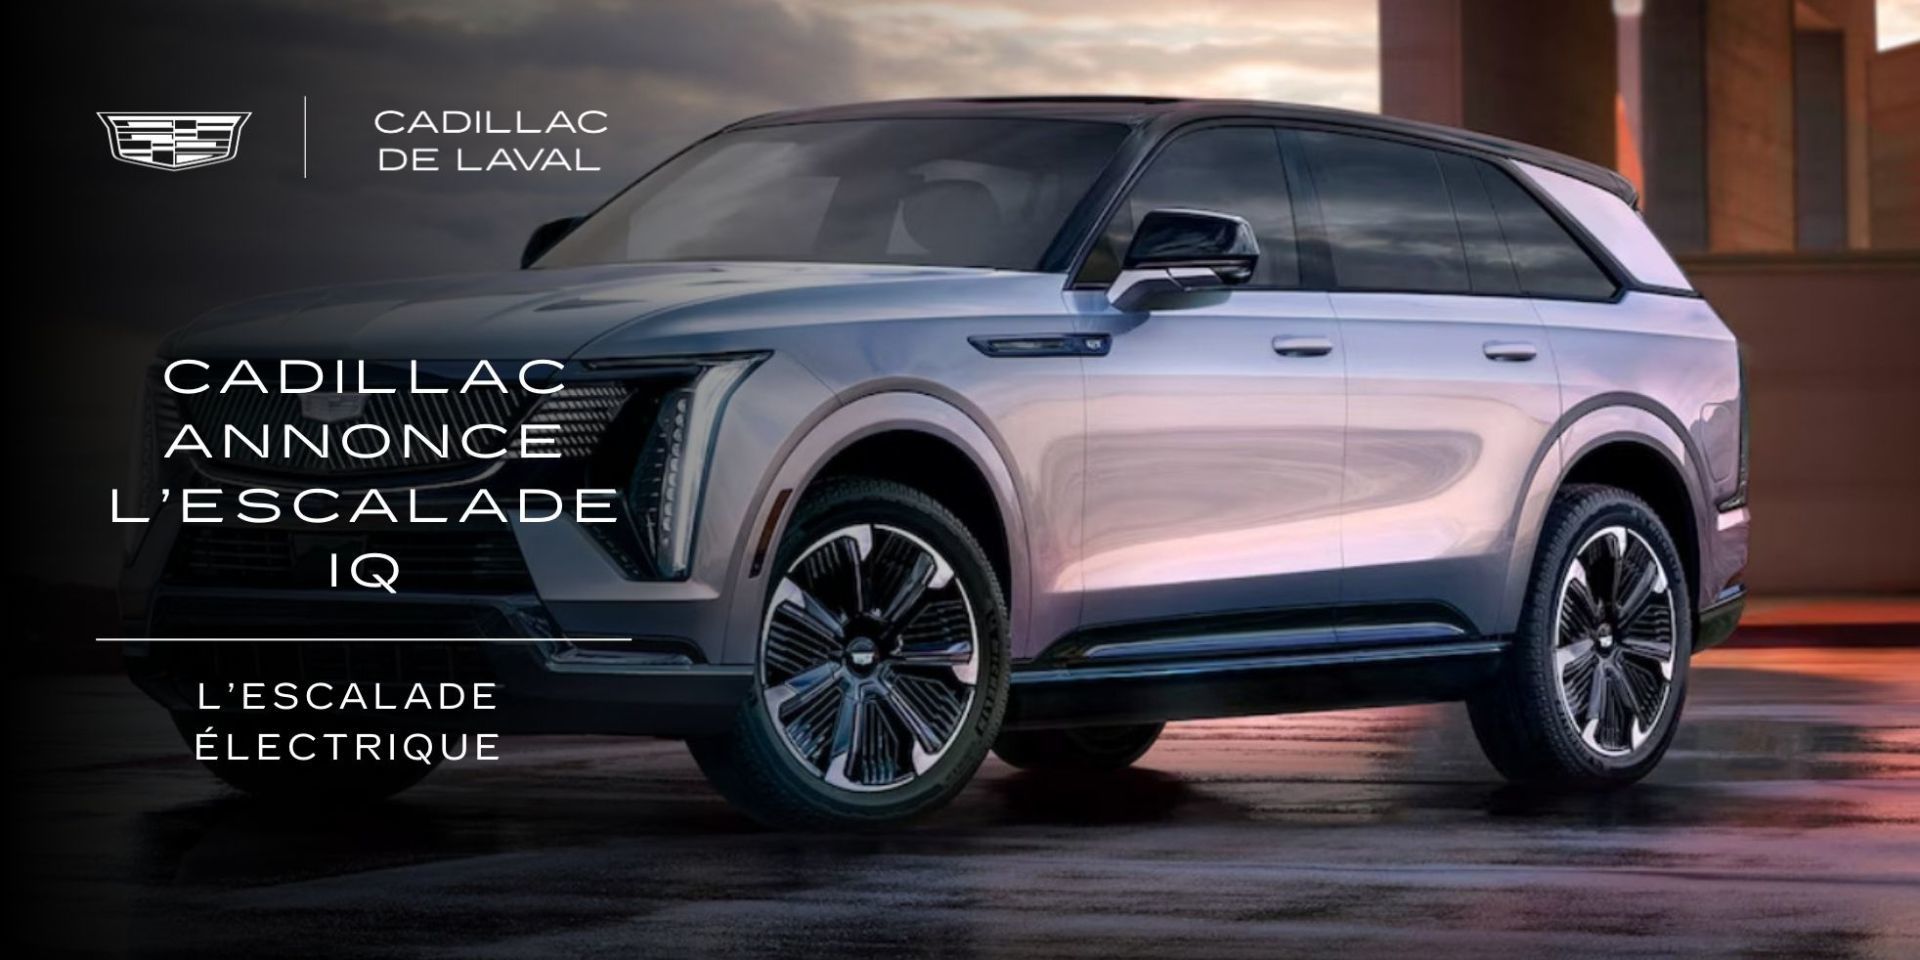 Cadillac reveals the Escalade IQ: an electric Escalade